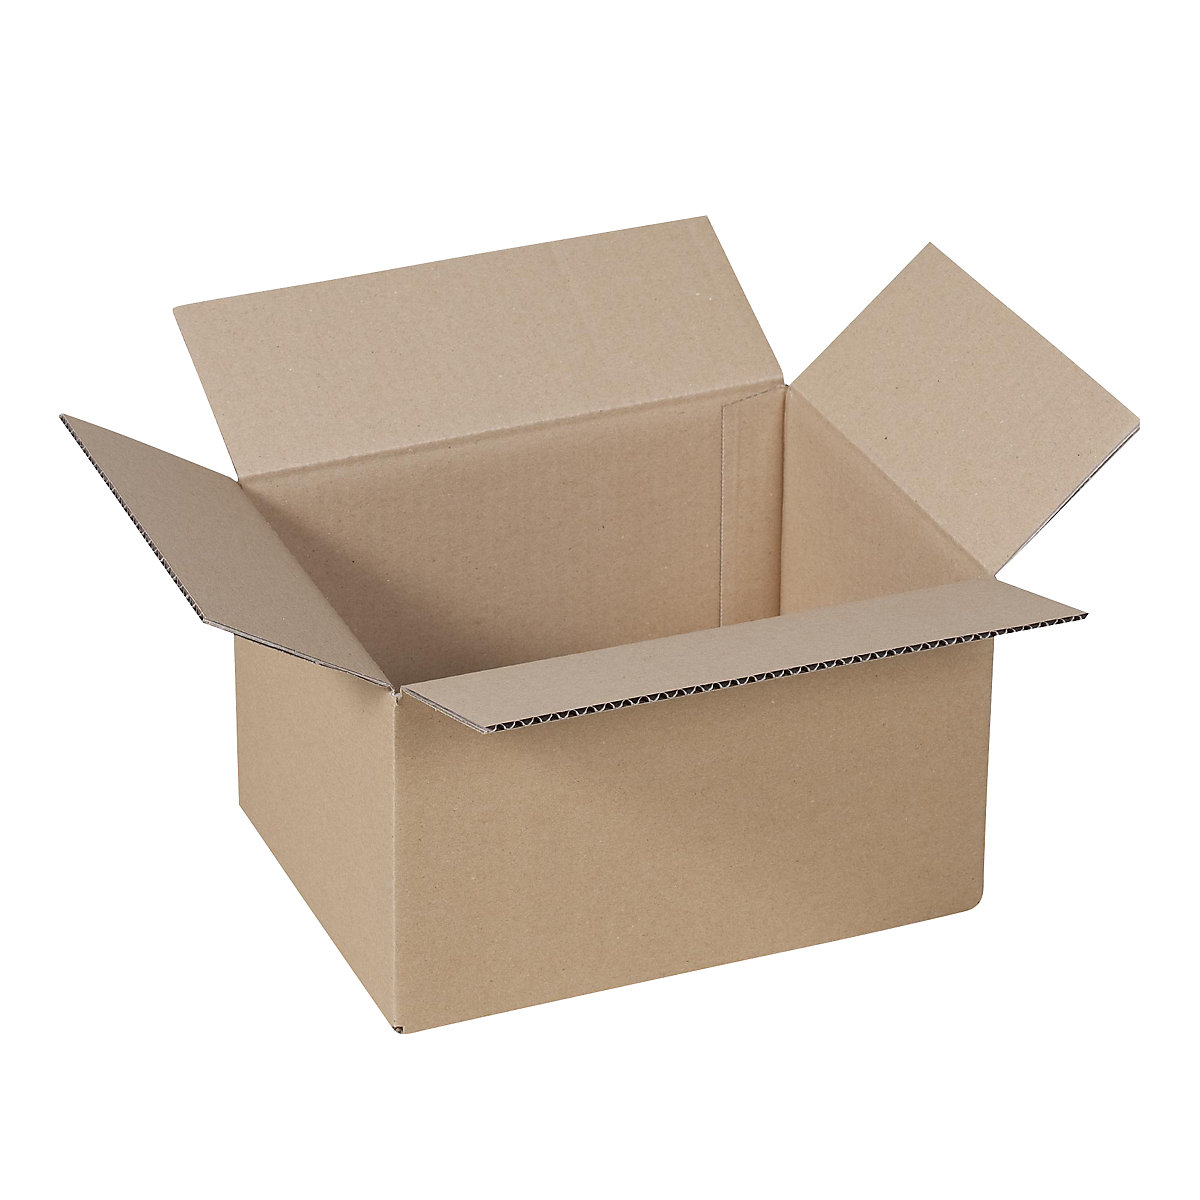 Folding cardboard box, FEFCO 0201, made of single fluted cardboard, internal dimensions 200 x 140 x 120 mm, pack of 100-10